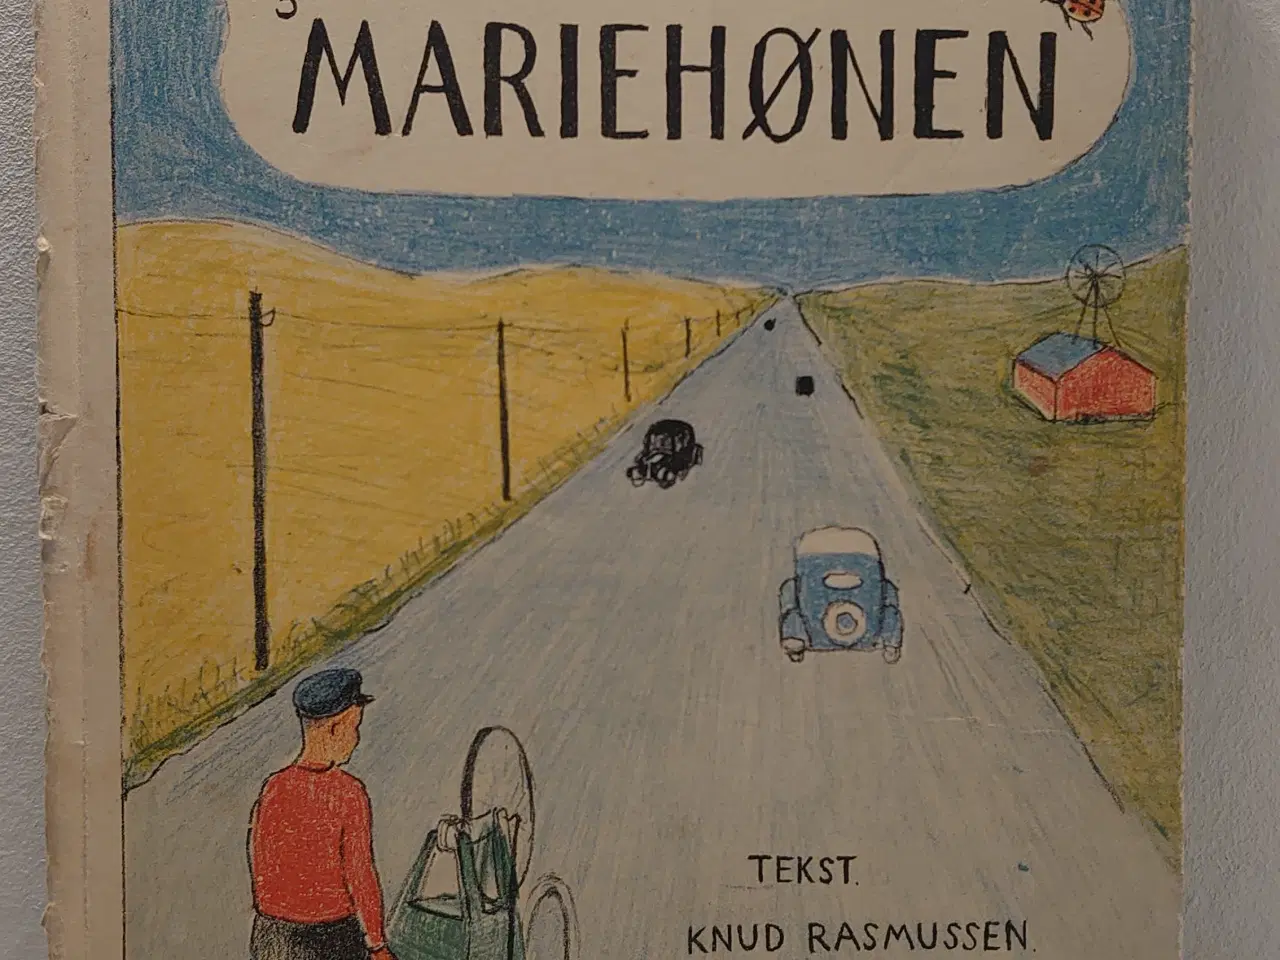 Billede 1 - Knud Rasmussen:Skærslipperen og Mariehønen. 1943.